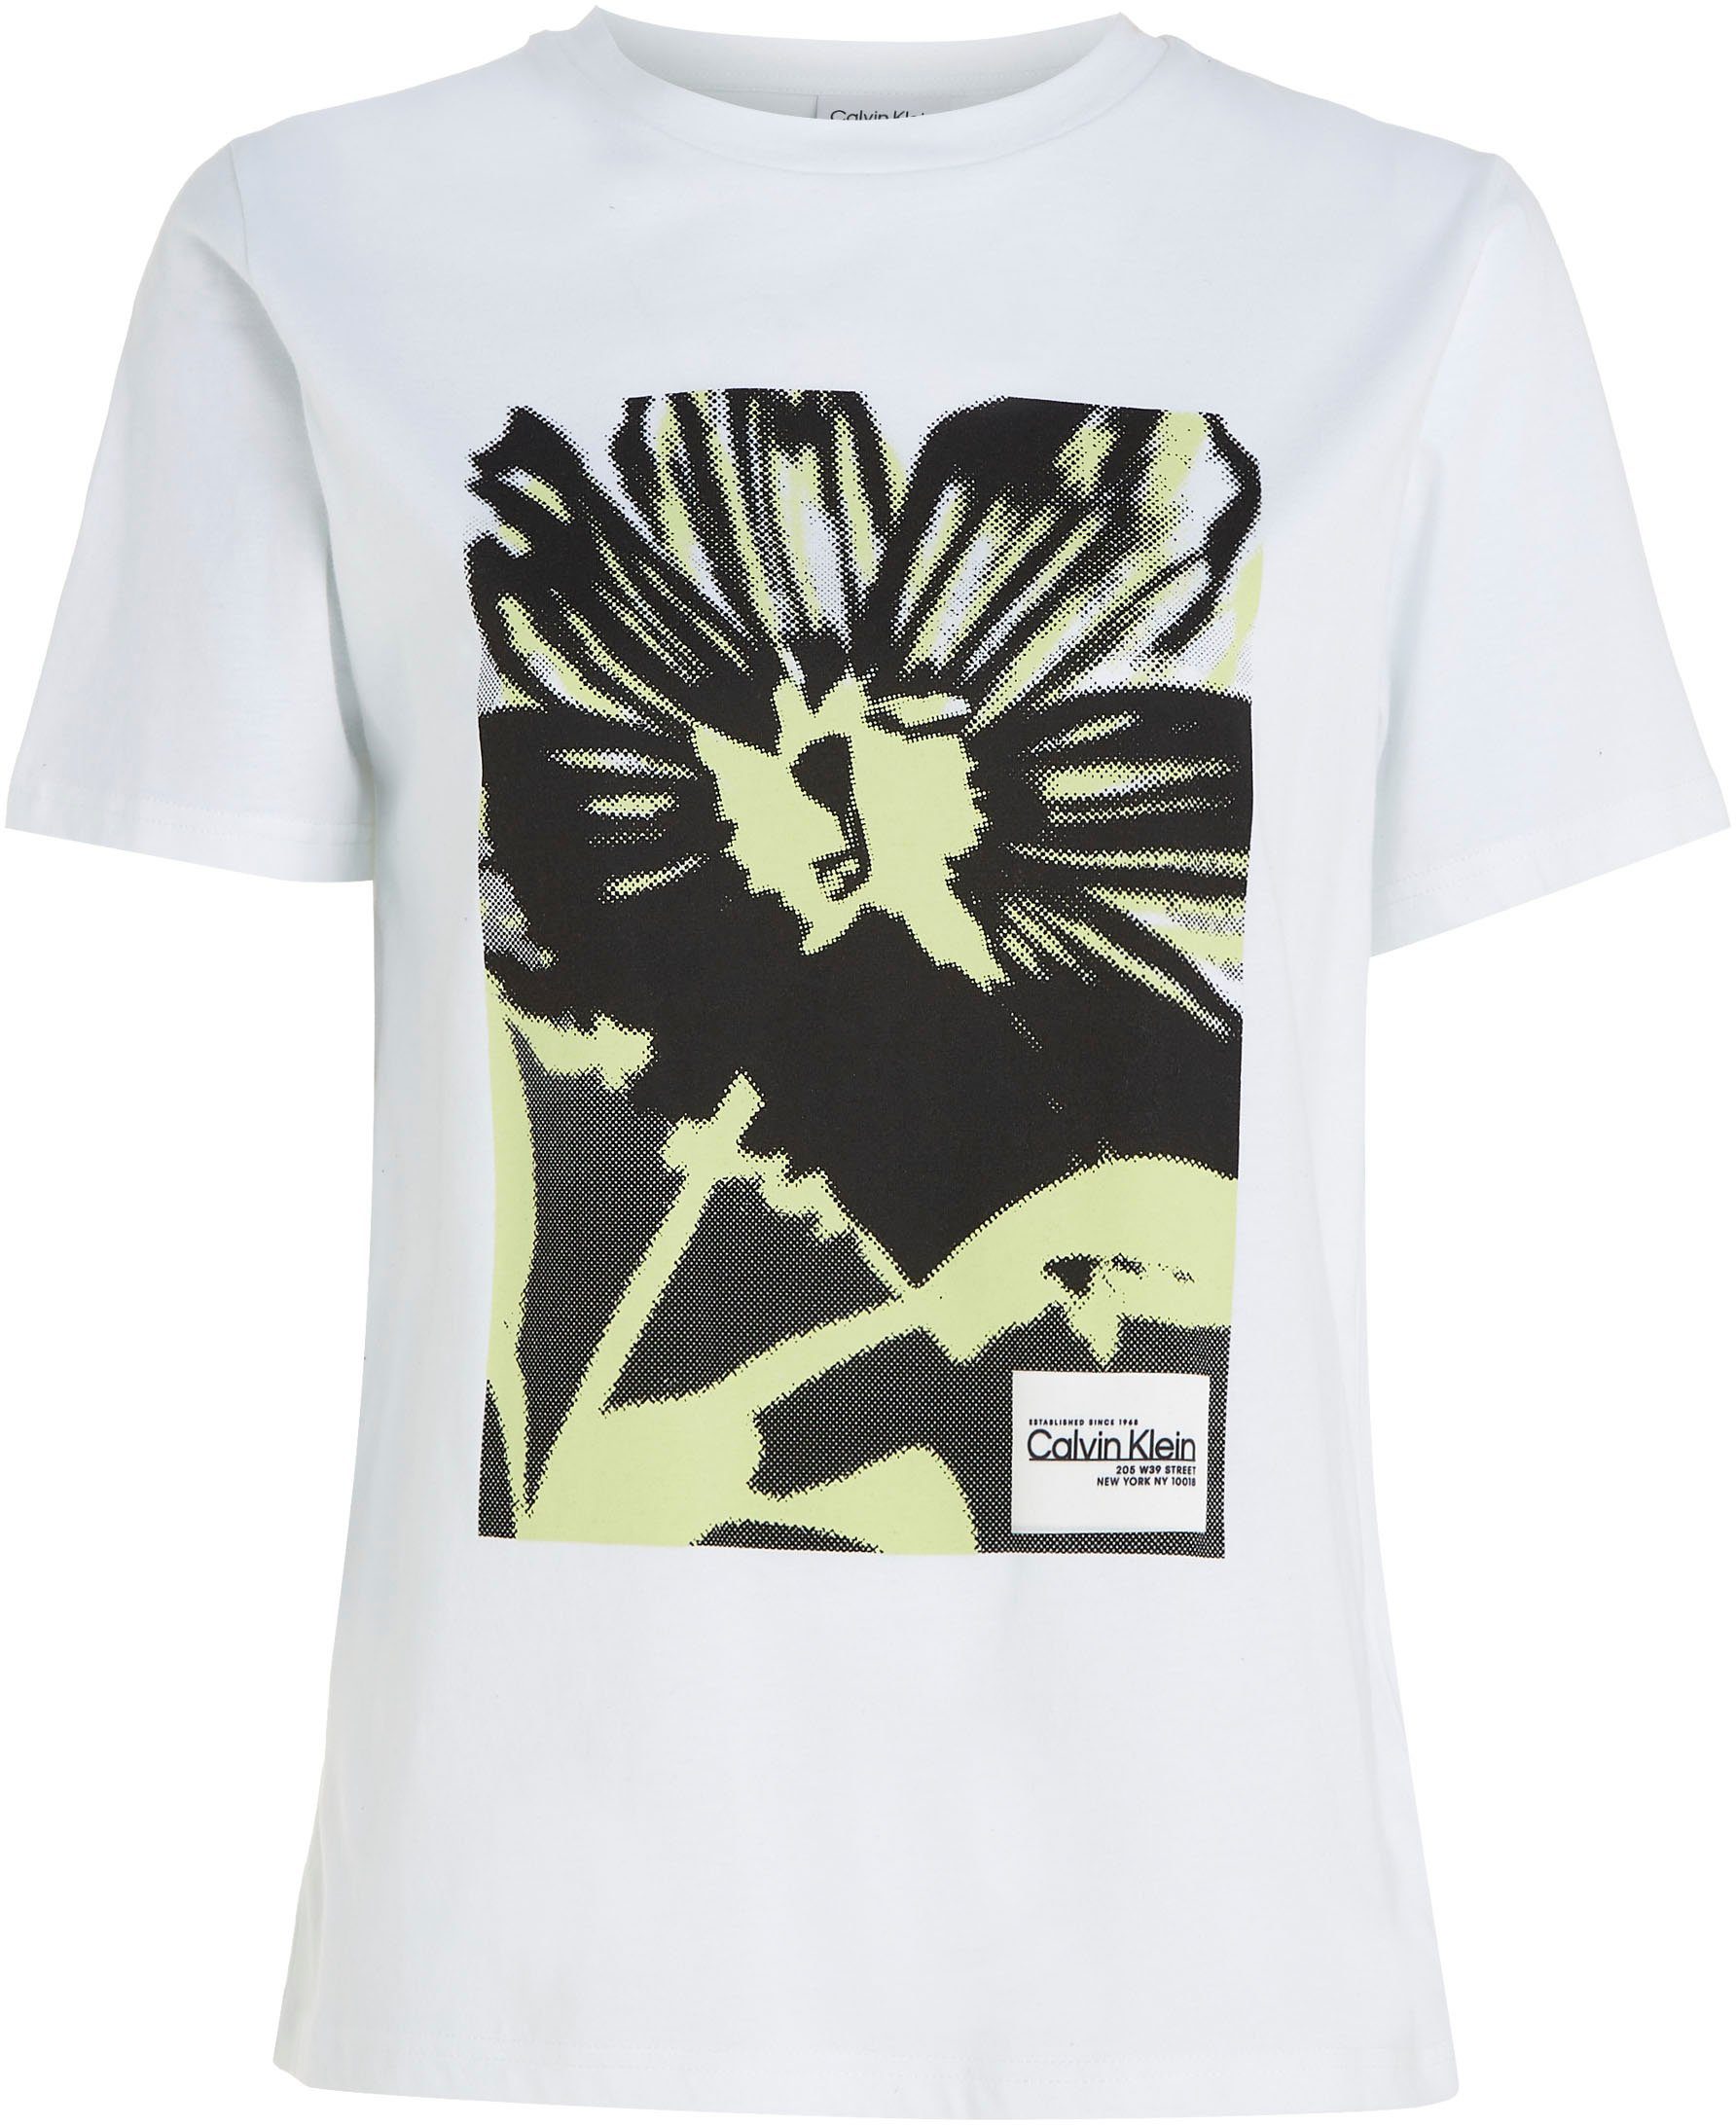 Floral-Printmuster Calvin mit Klein T-Shirt